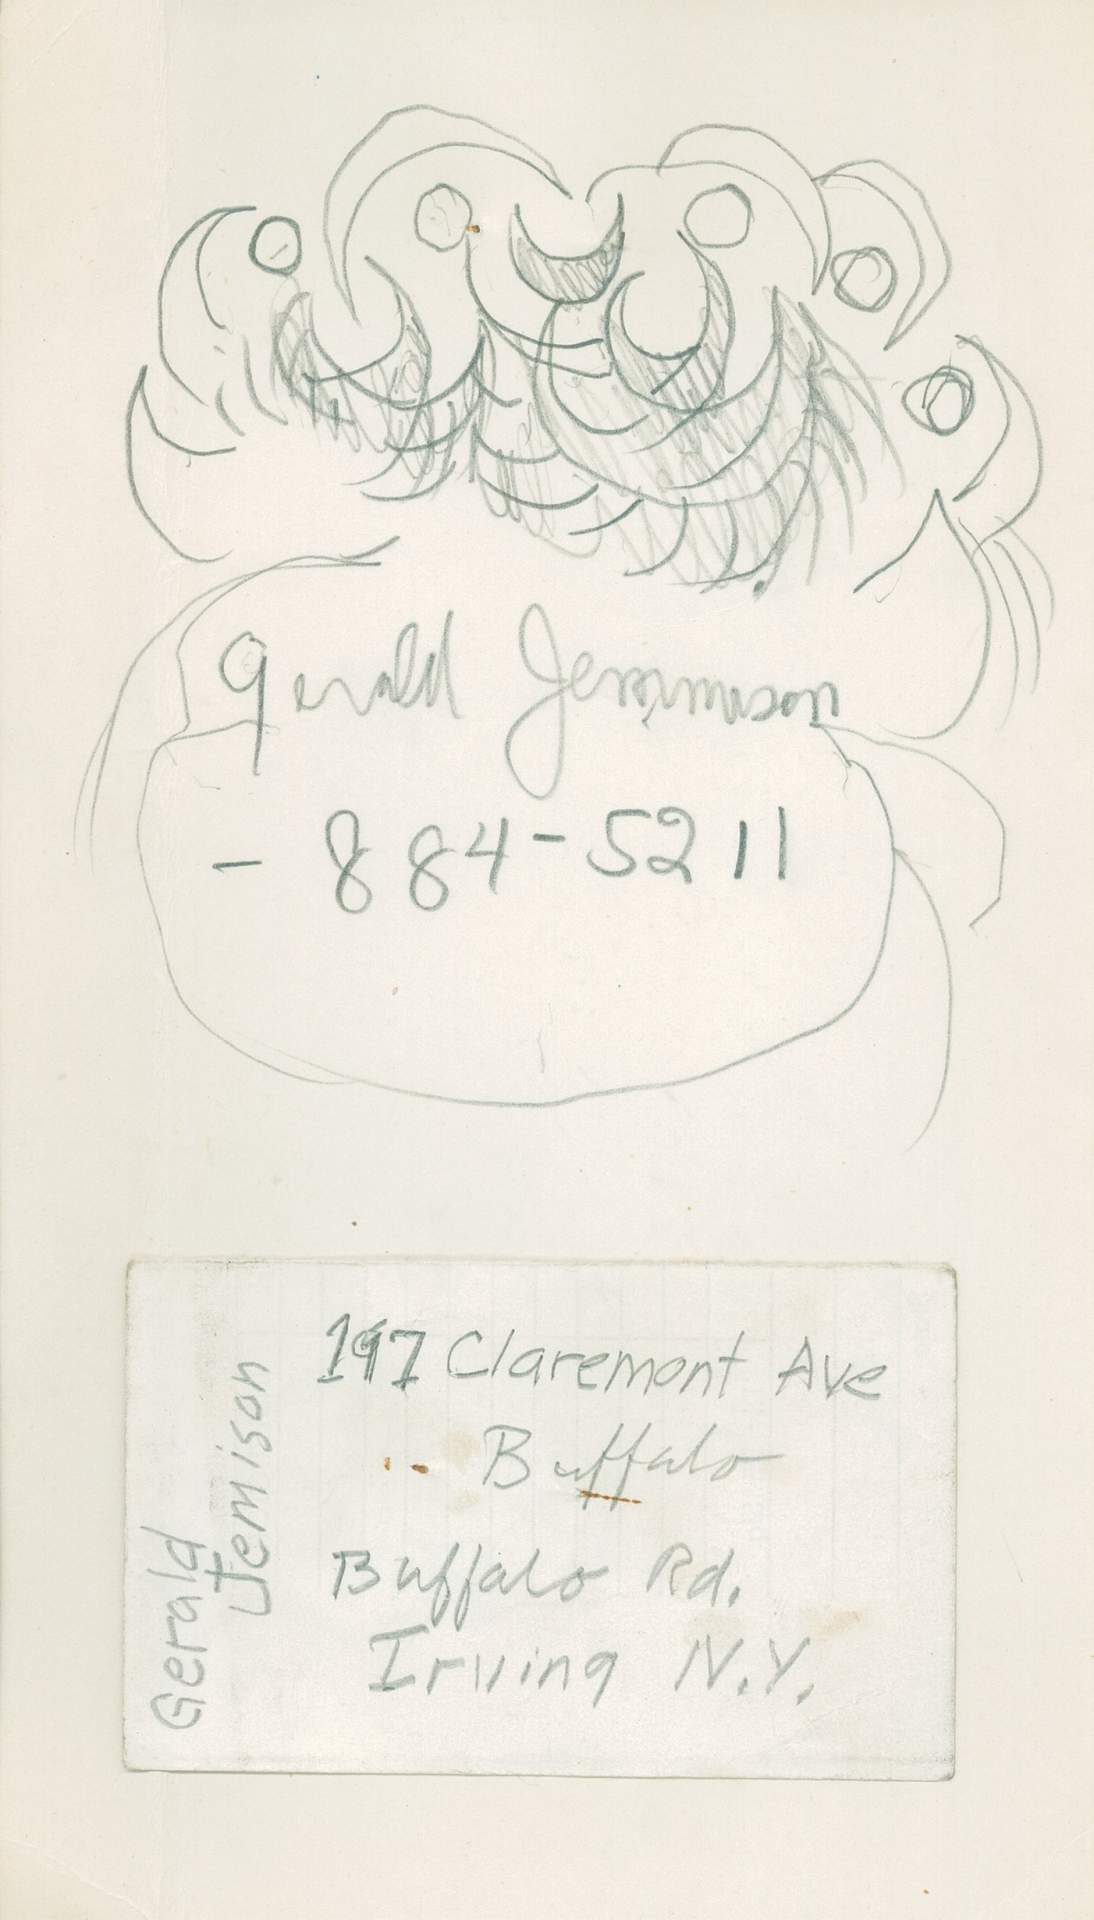 Gerald Jemison with doodle